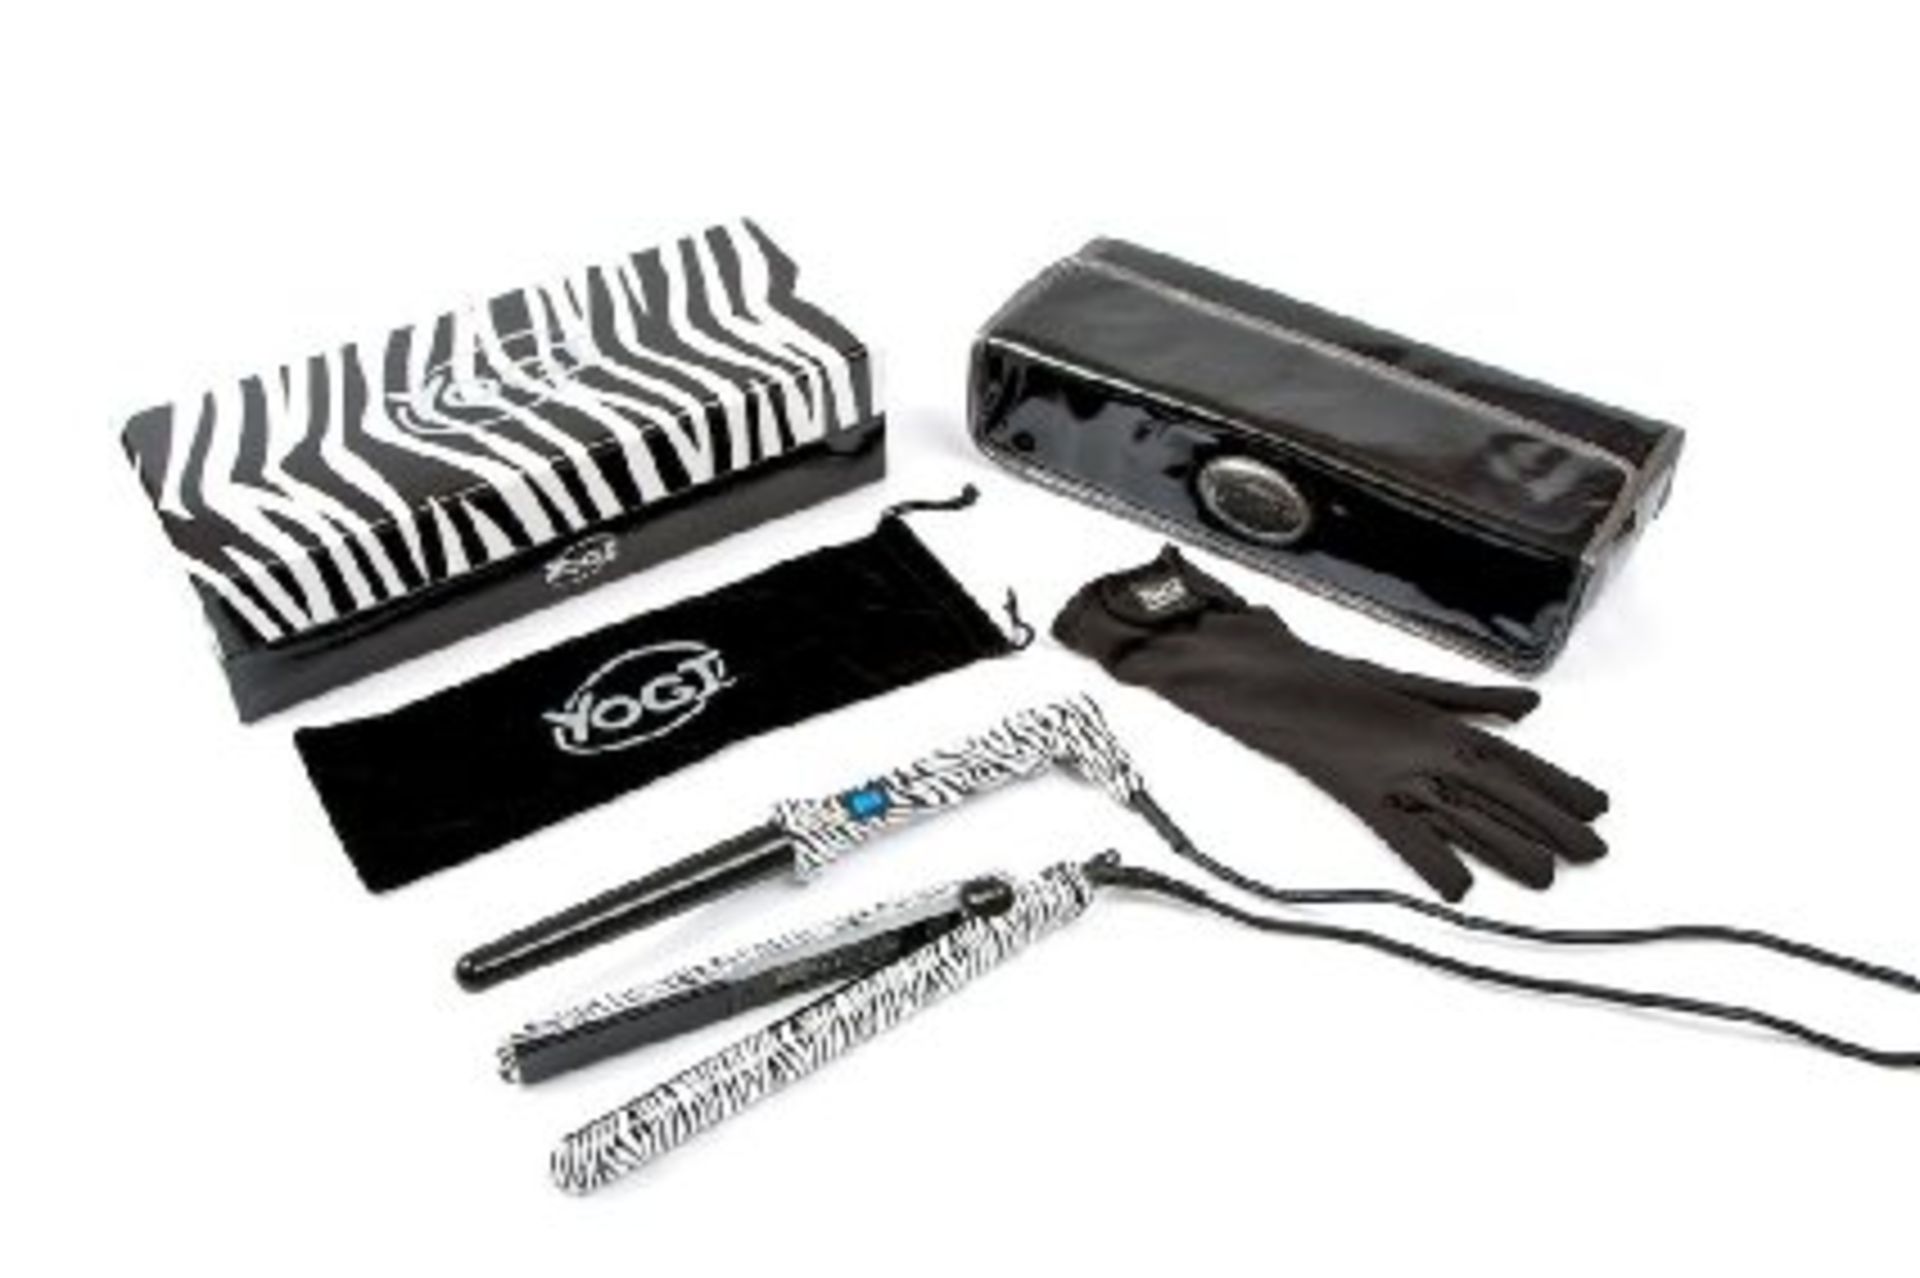 V Brand New Yogi Gift Set Twin Pack Straightener And Wand In Zebra Pattern RRP £129.99 - Image 4 of 4